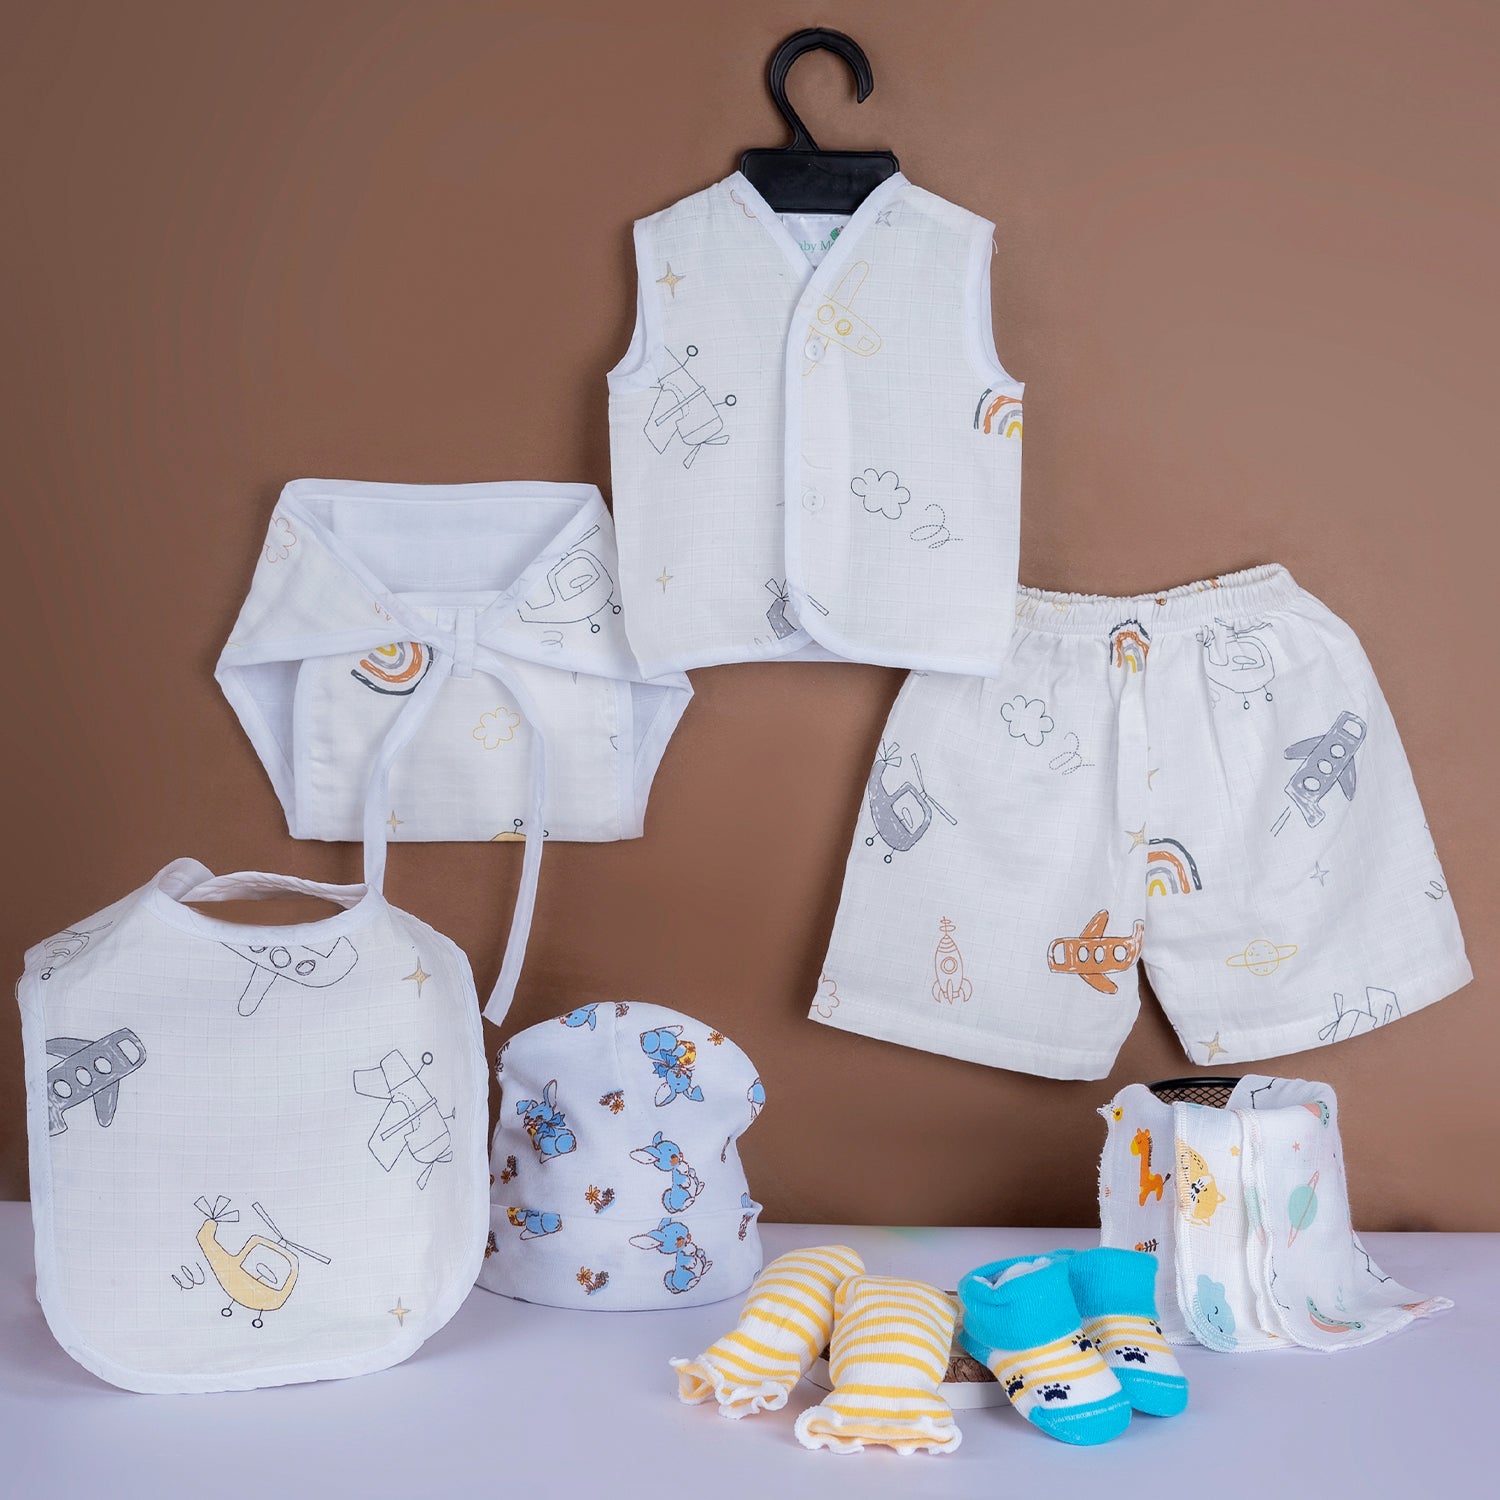 Baby Moo Sky Explorer Theme Print Infant Essentials 10 Pcs Muslin Clothing Gift Set - Multicolour